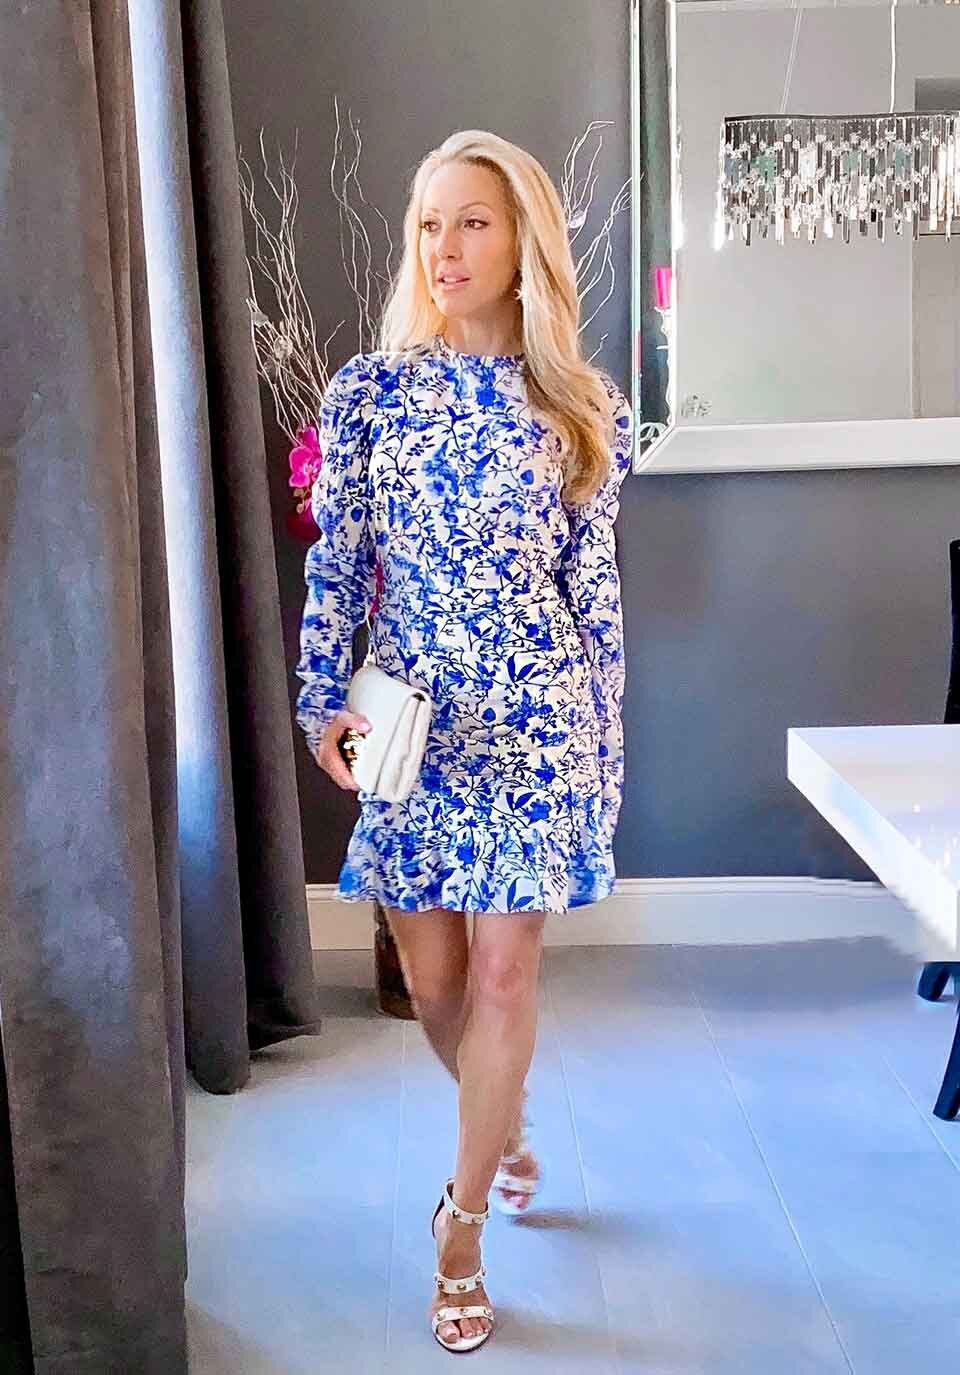 dyson airwrap tips Cruelty free beauty blogger eve dawes blue dress